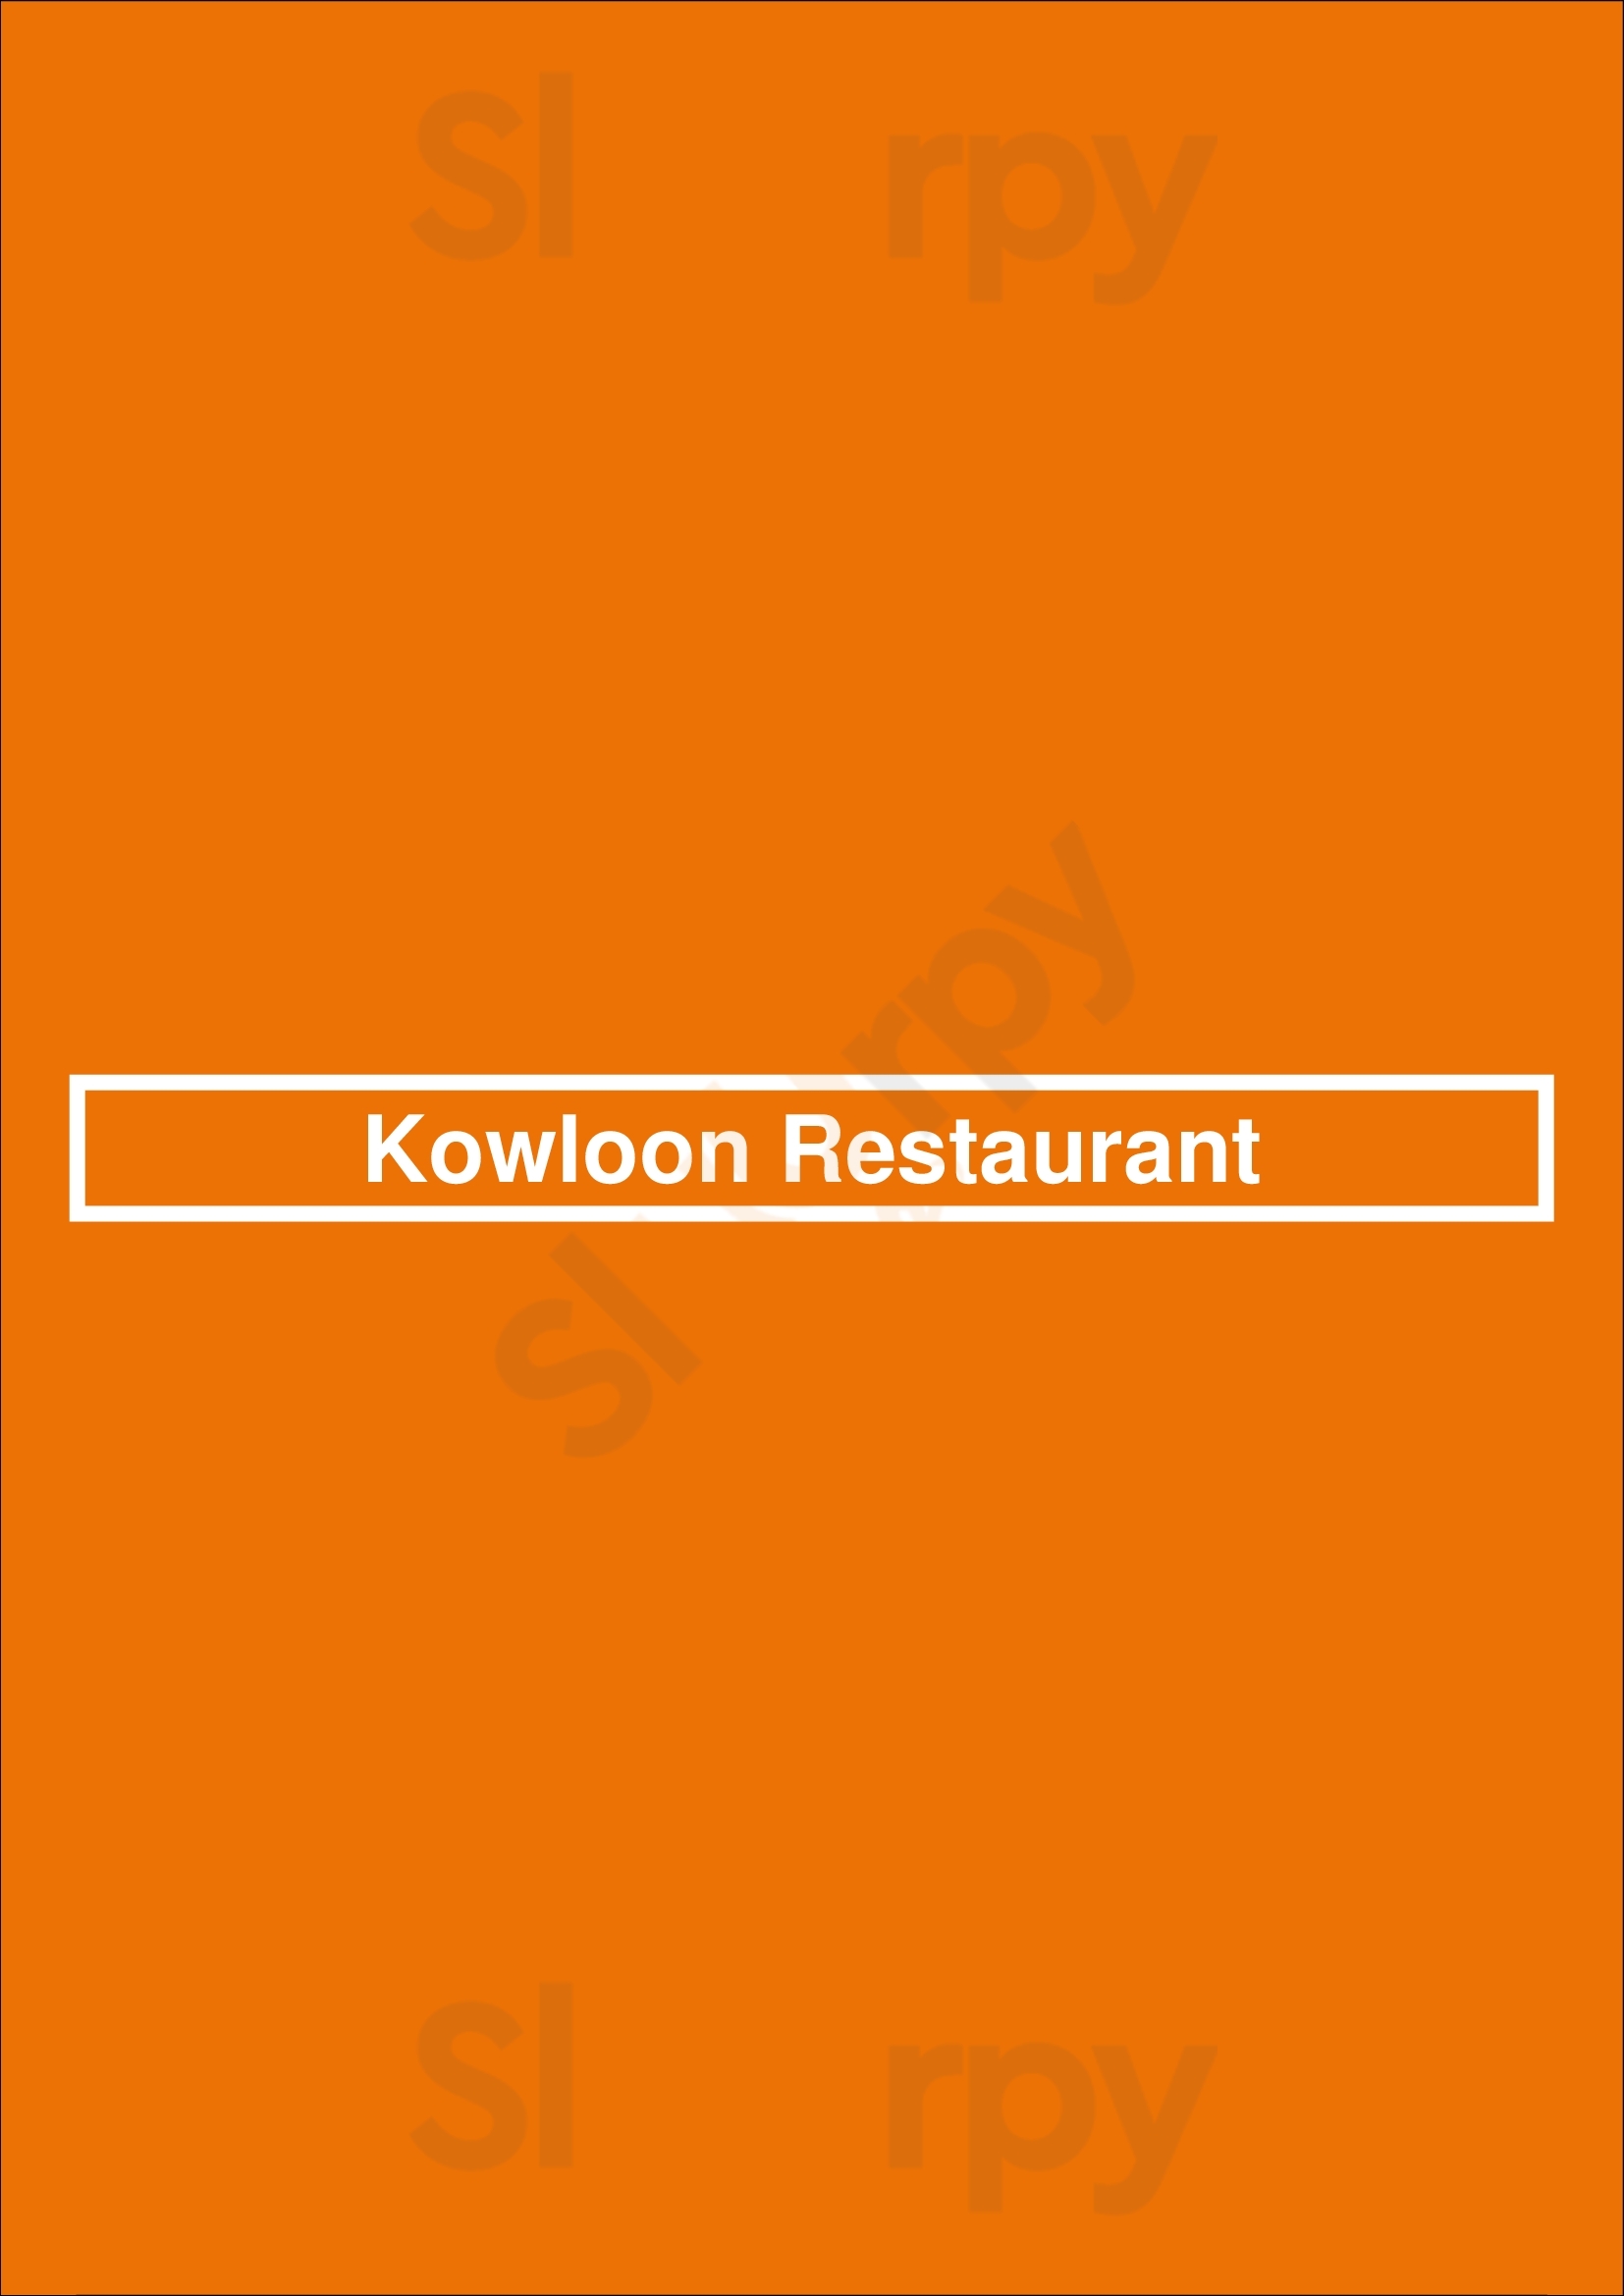 Kowloon Restaurant Saugus Menu - 1